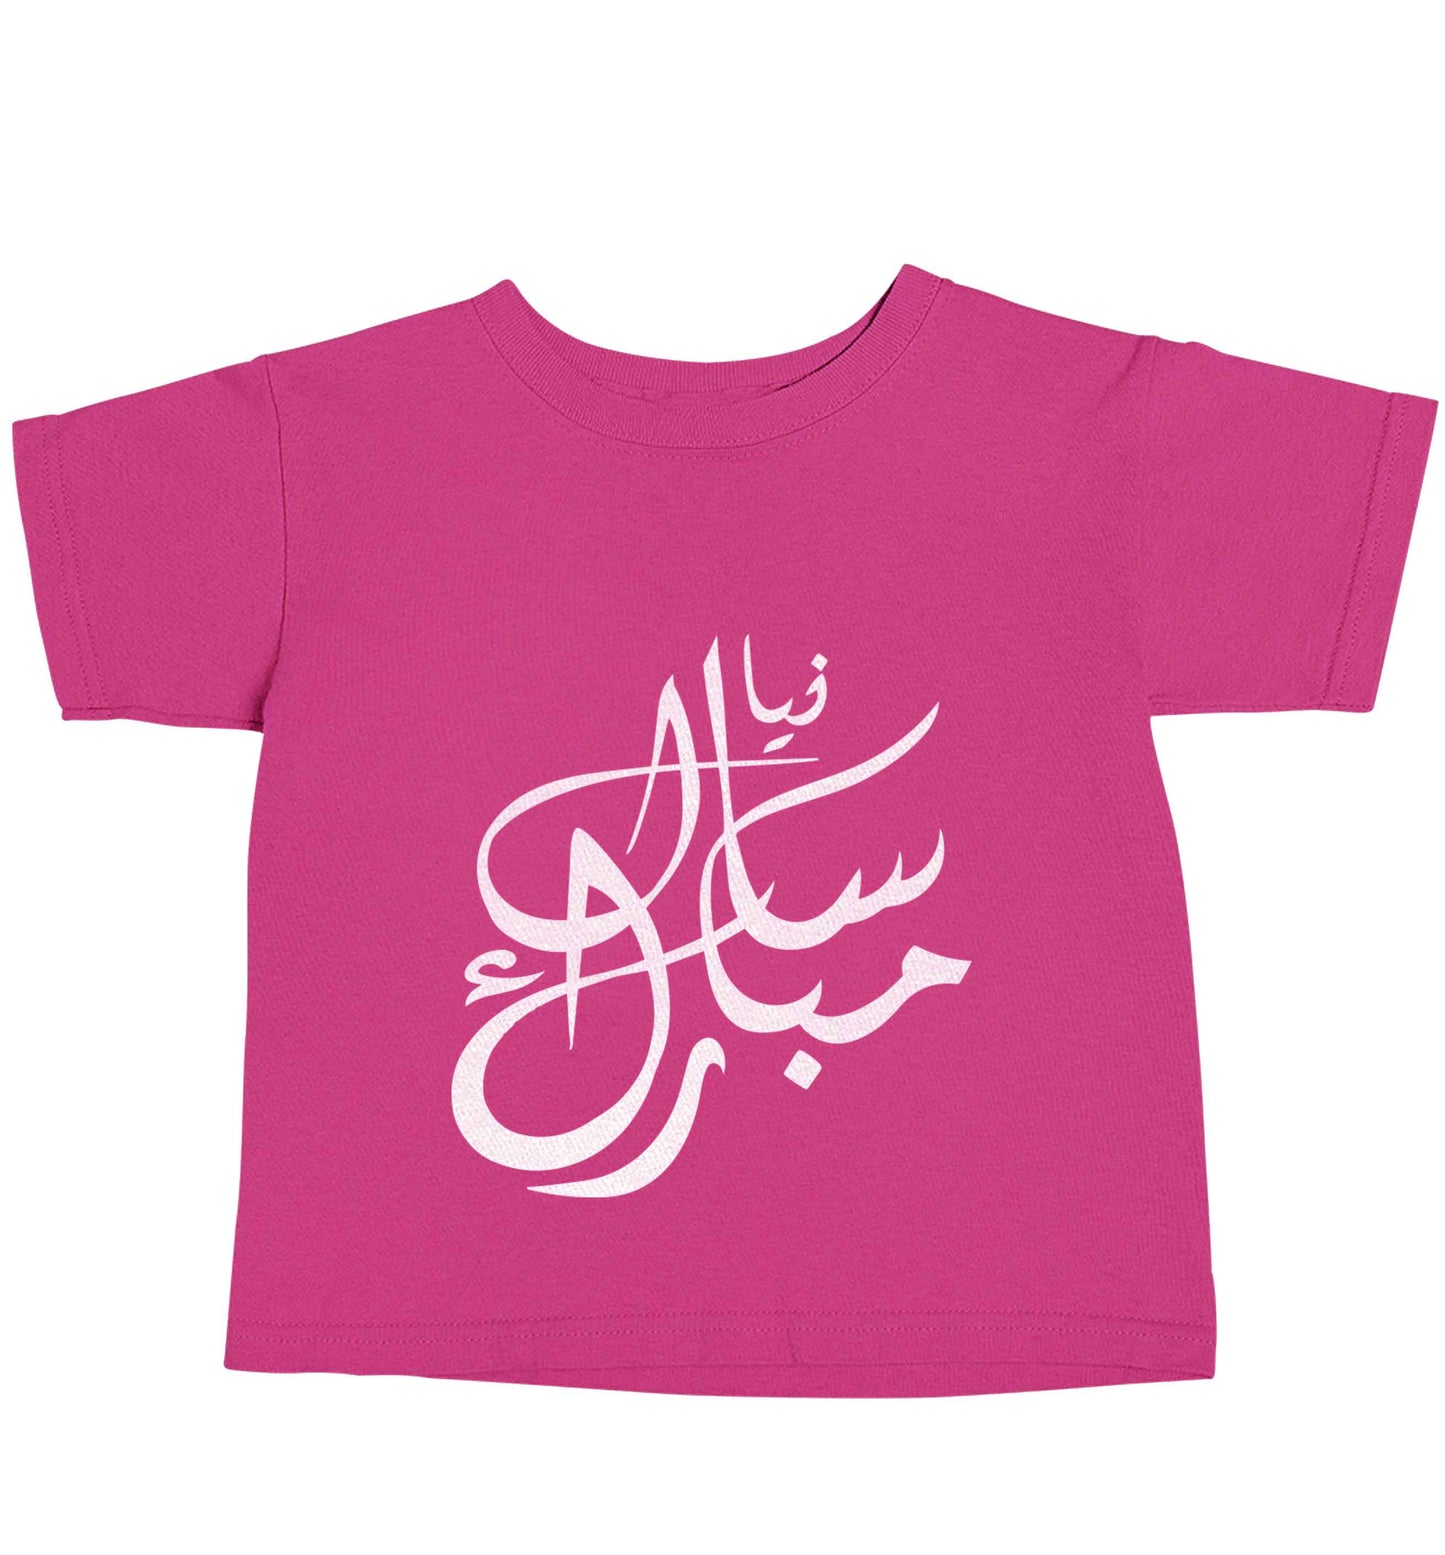 Urdu Naya saal mubarak pink baby toddler Tshirt 2 Years